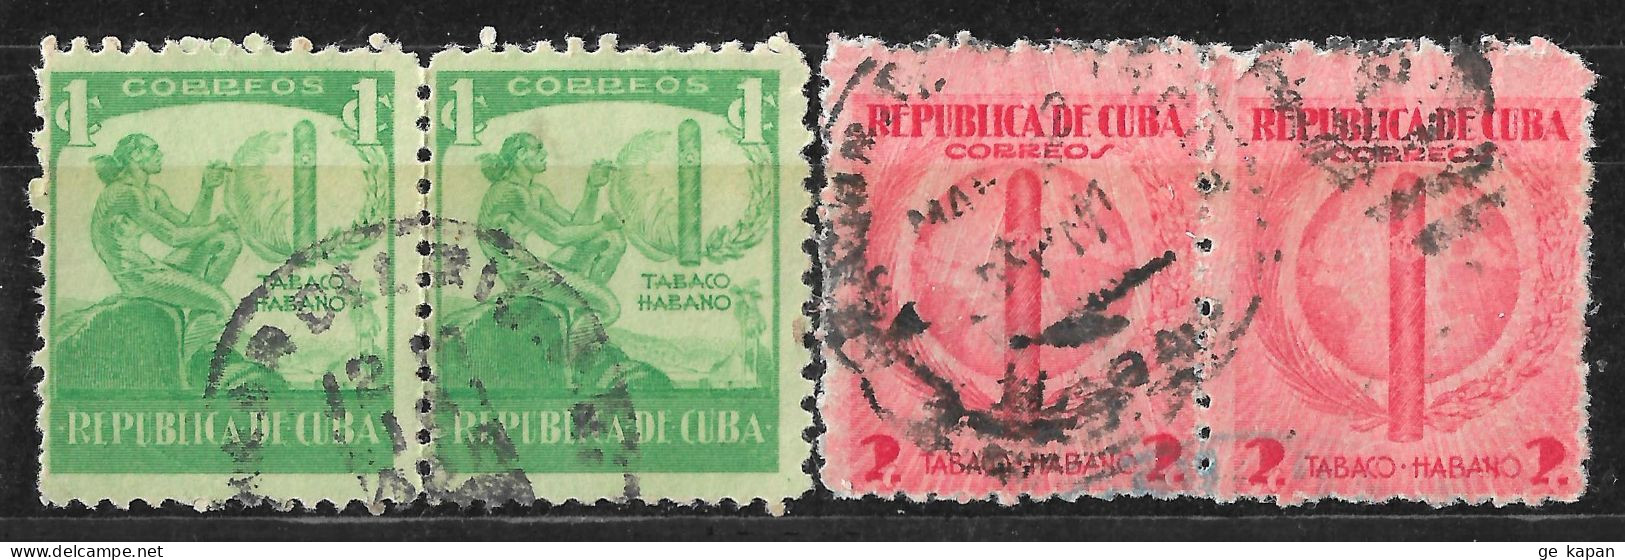 1939 CUBA SET OF 2 USED HORIZONTAL PAIR (Michel # 158,159) - Usados